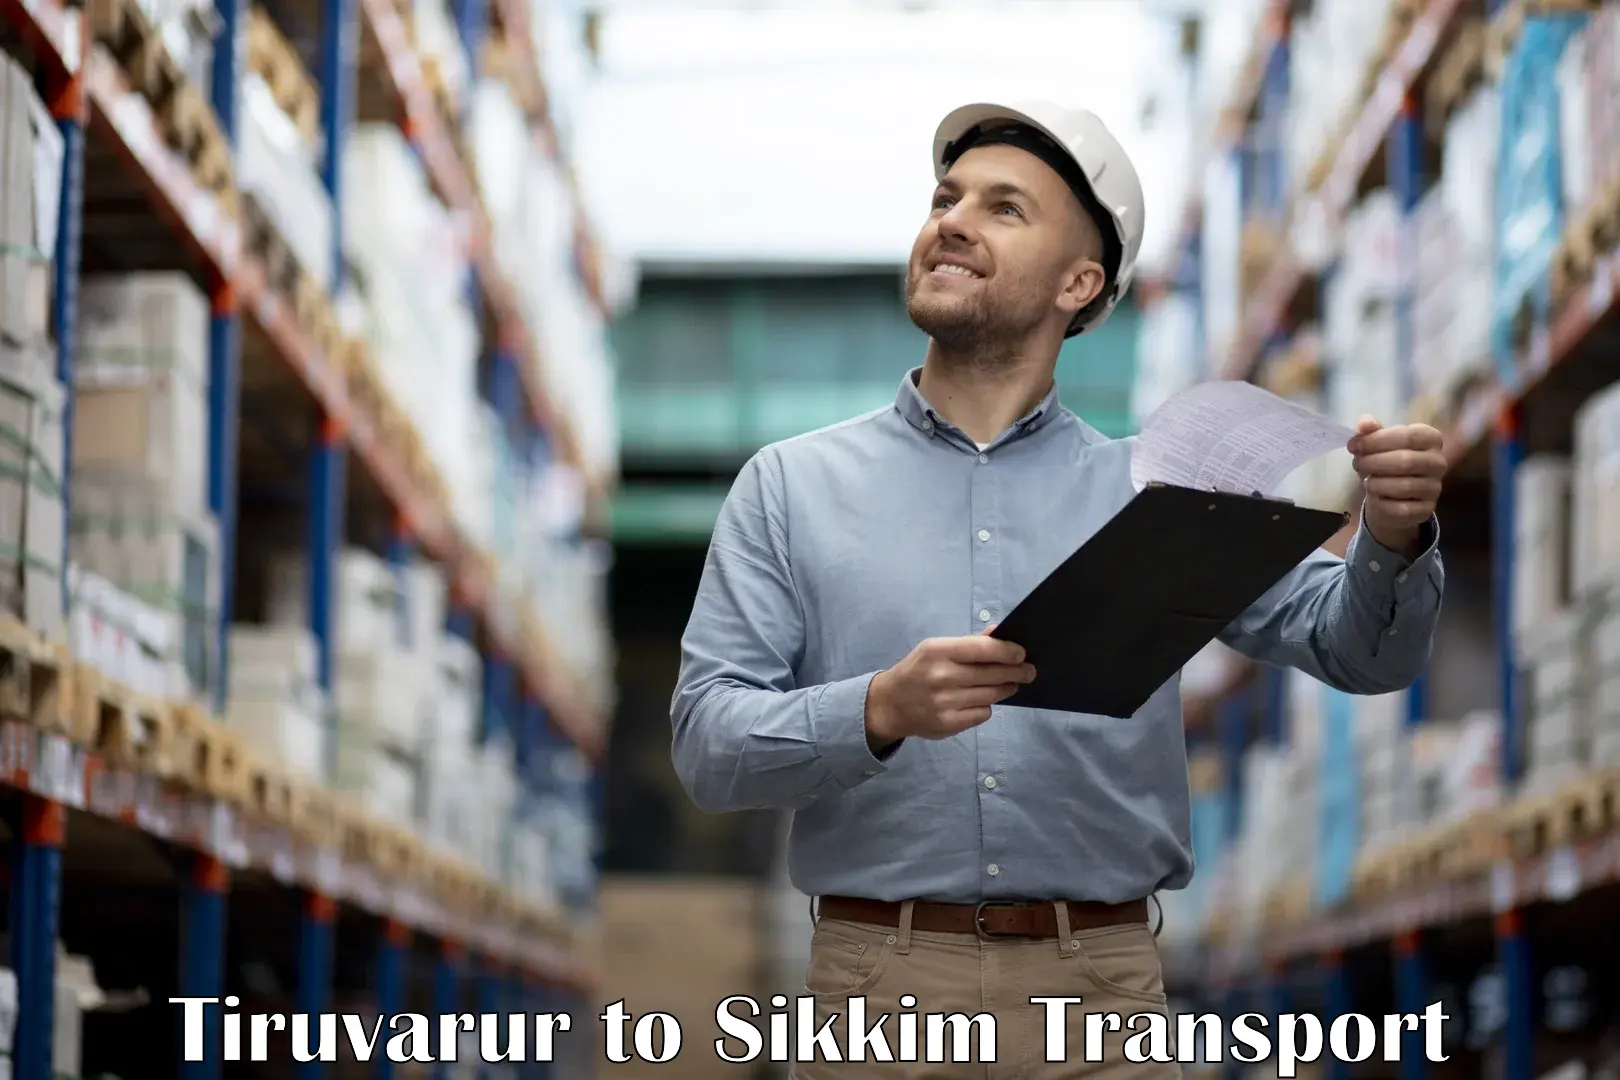 Container transport service Tiruvarur to Pelling